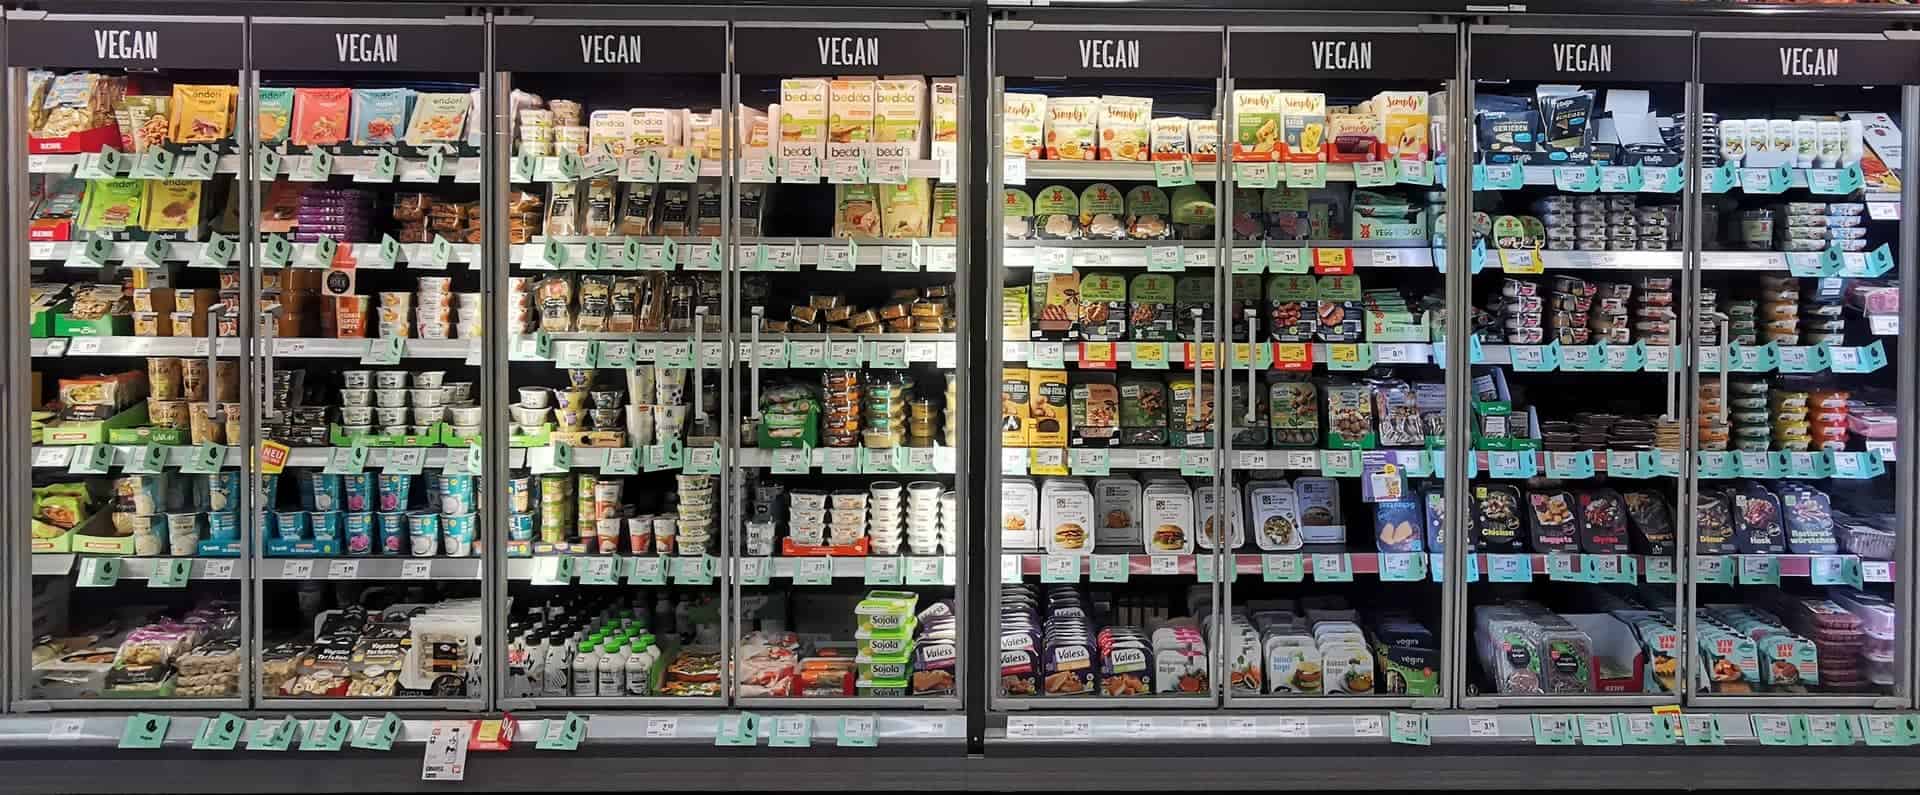 Fleischersatz News KW 4 Veganuary veganes Sortiment Supermarkt